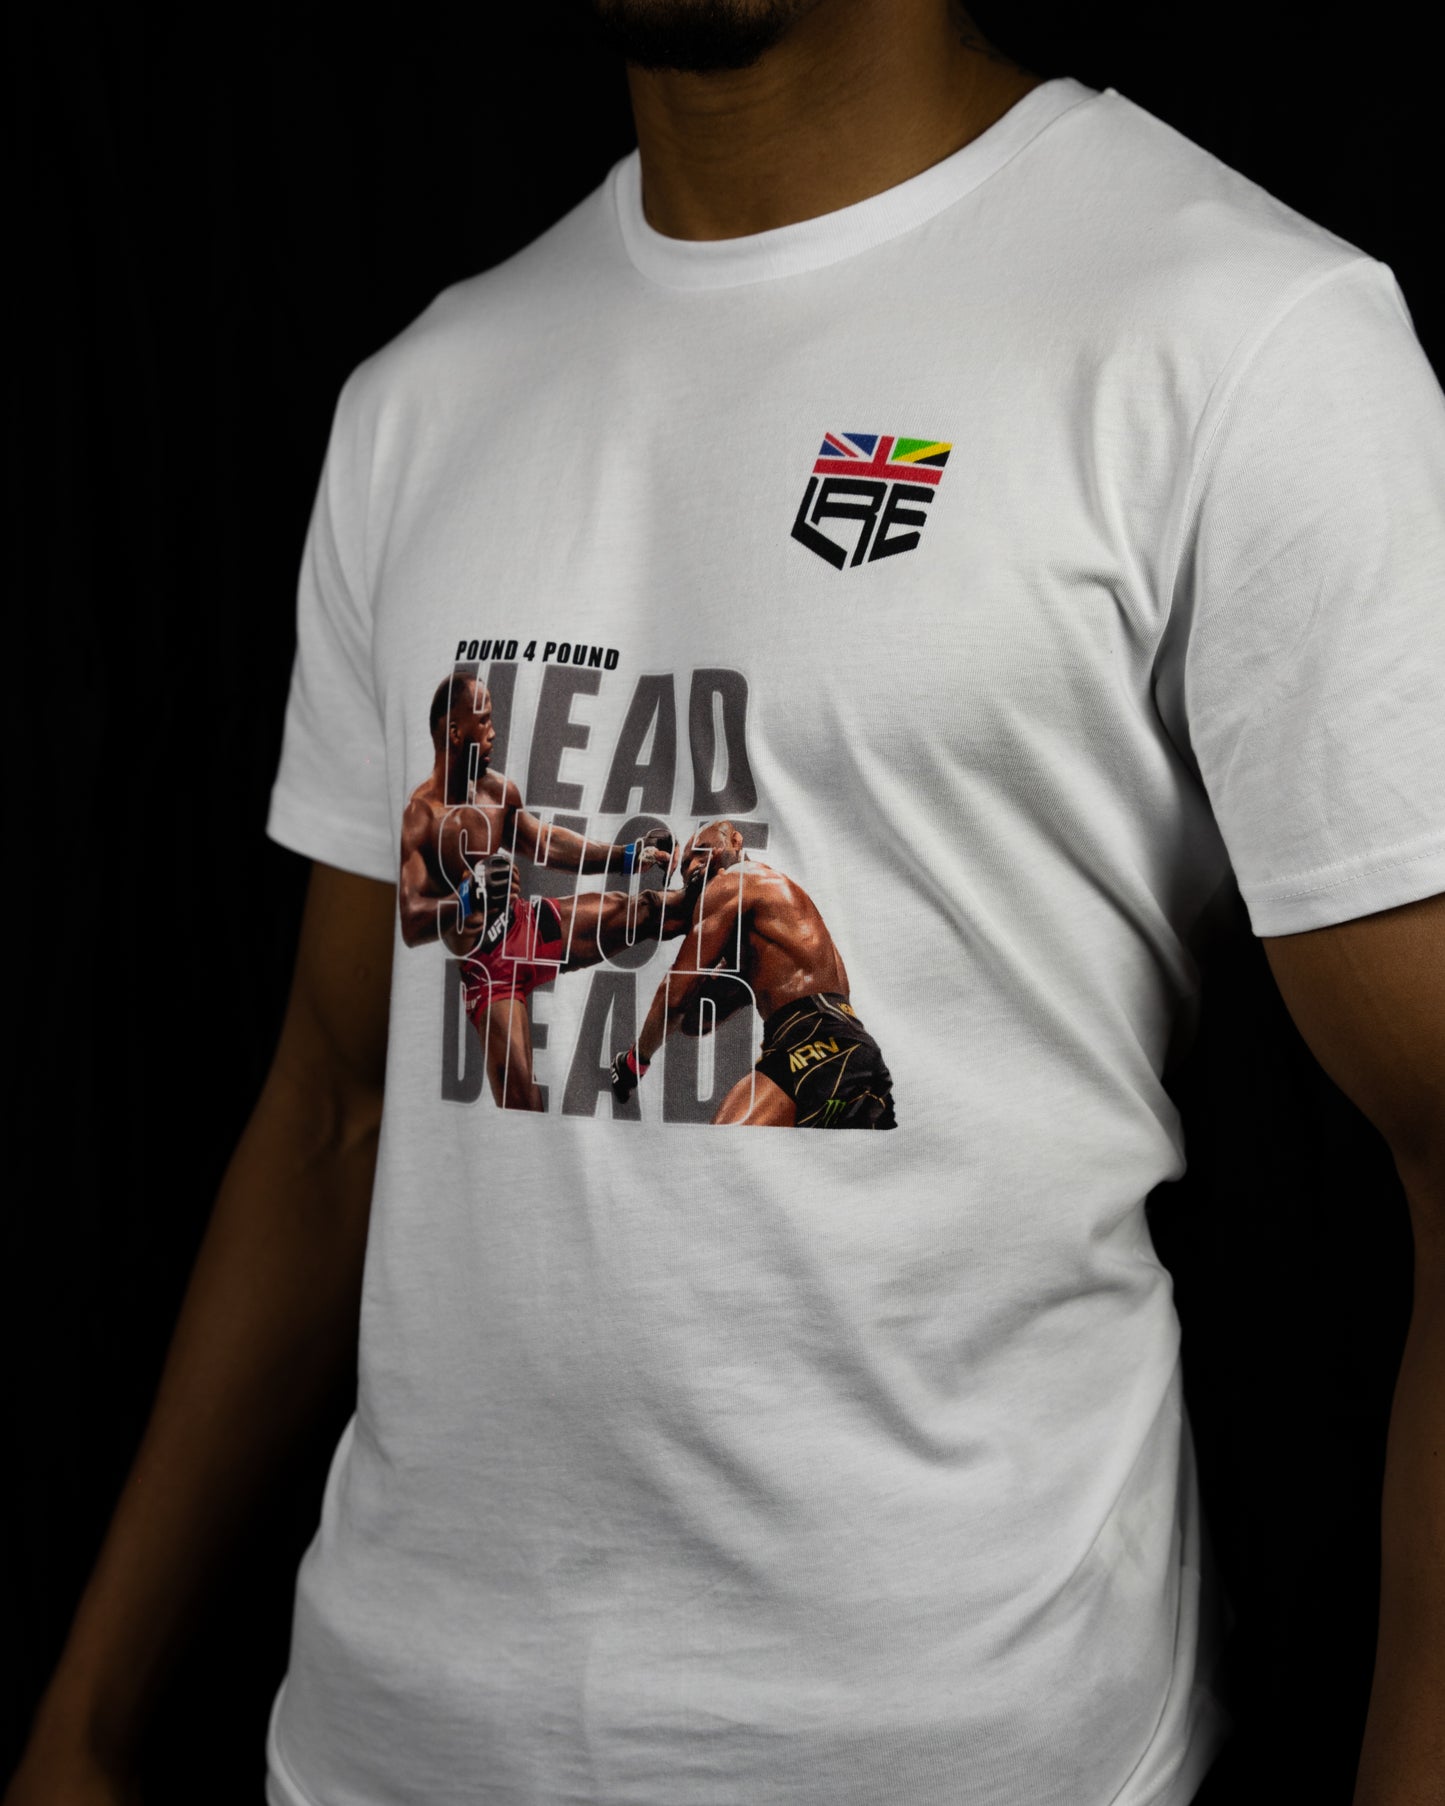 Limited Edition: Leon "Rocky" Edwards: "Pound for Pound, Headshot Dead." T-Shirt